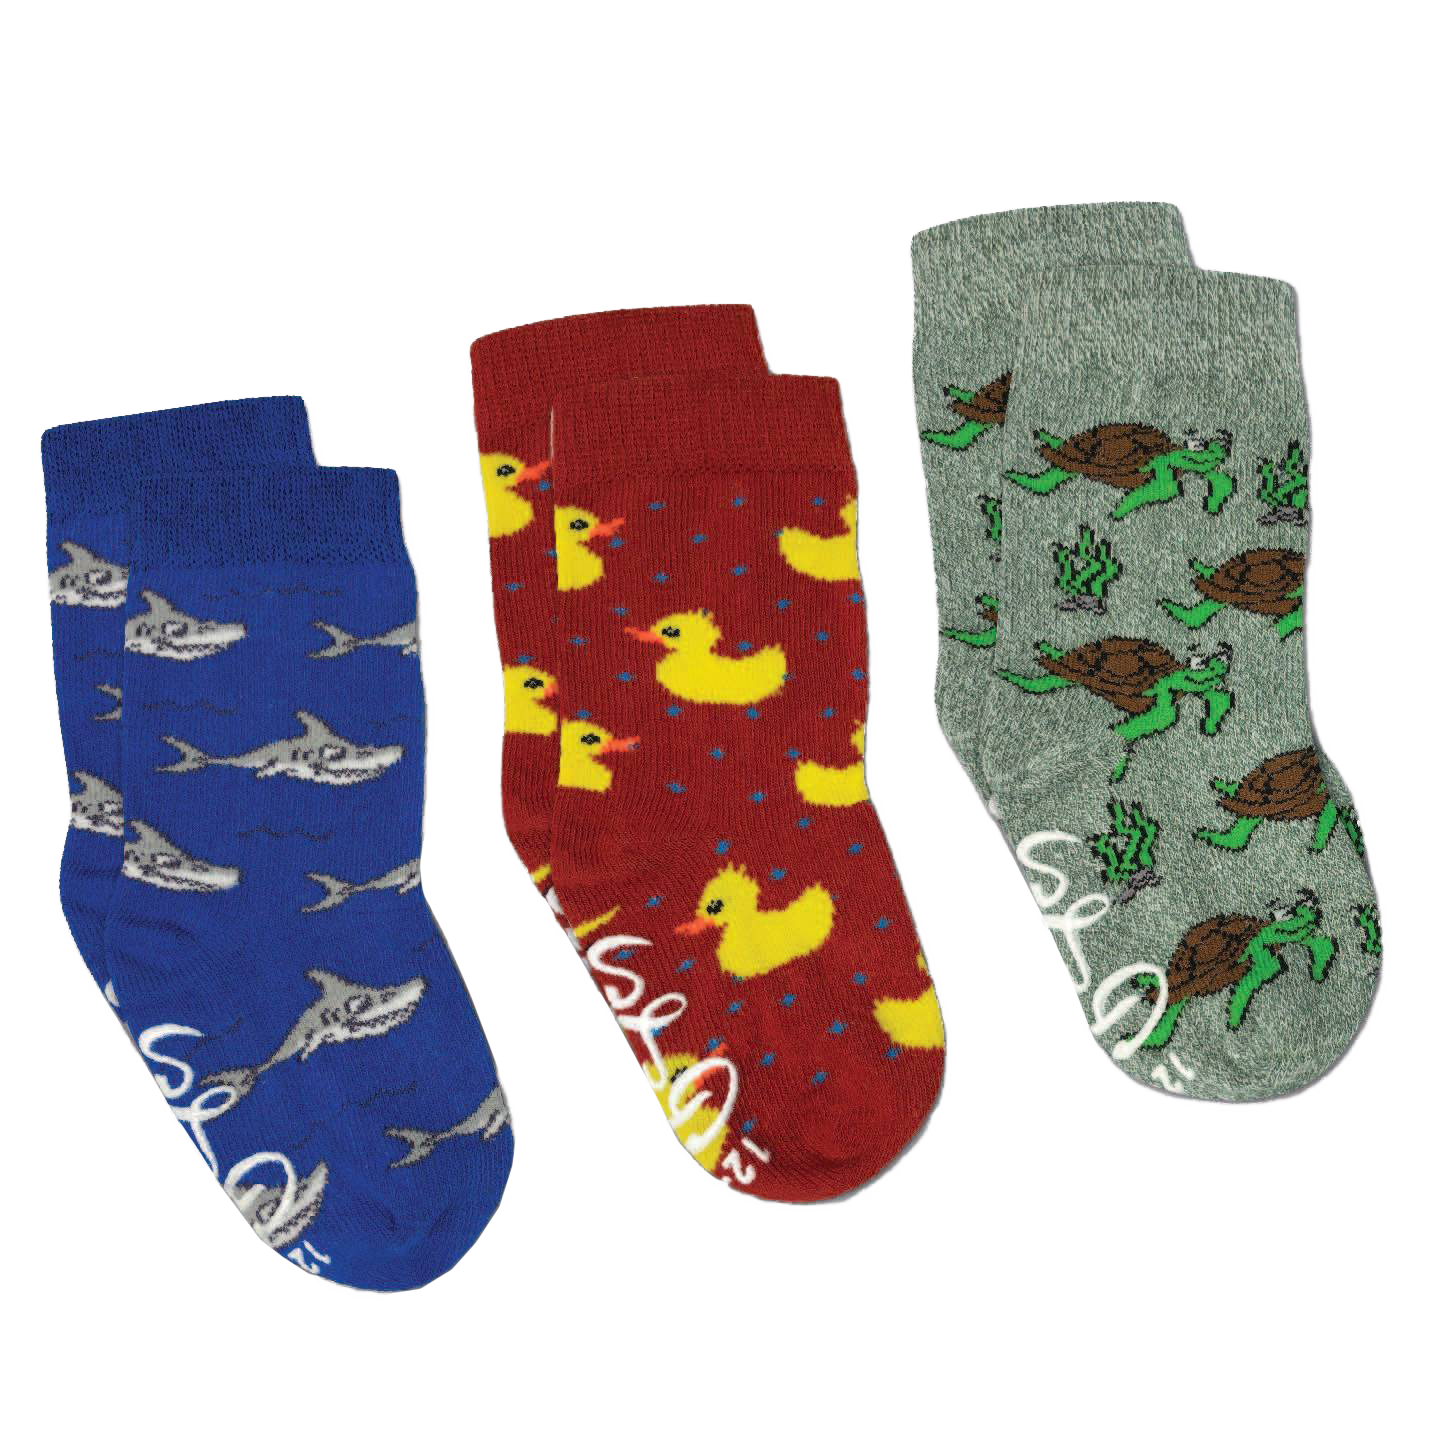 Retro Asian Tiger Socks Cotton Candy Colors Pop Art Style 